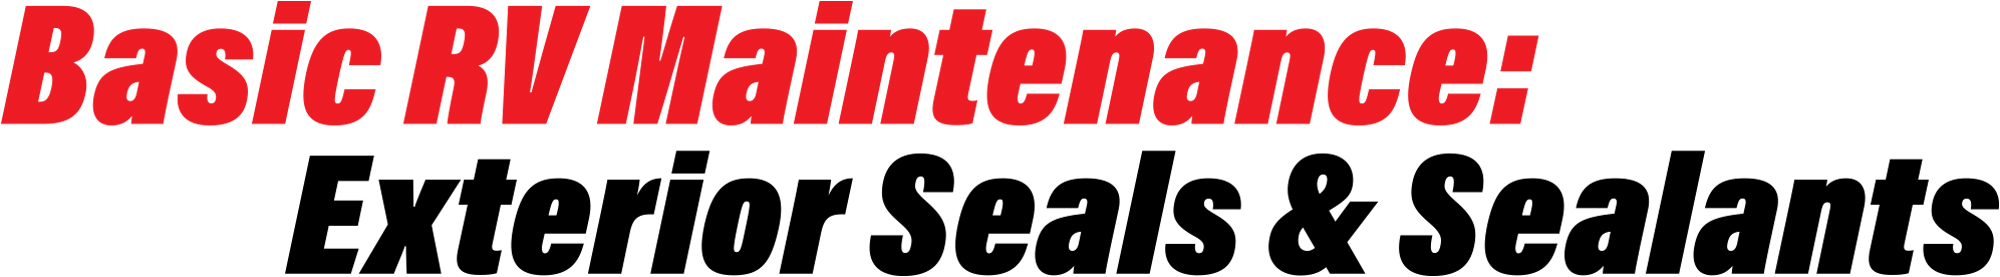 Basic RV Maintenance: Exterior Seals & Sealants typography